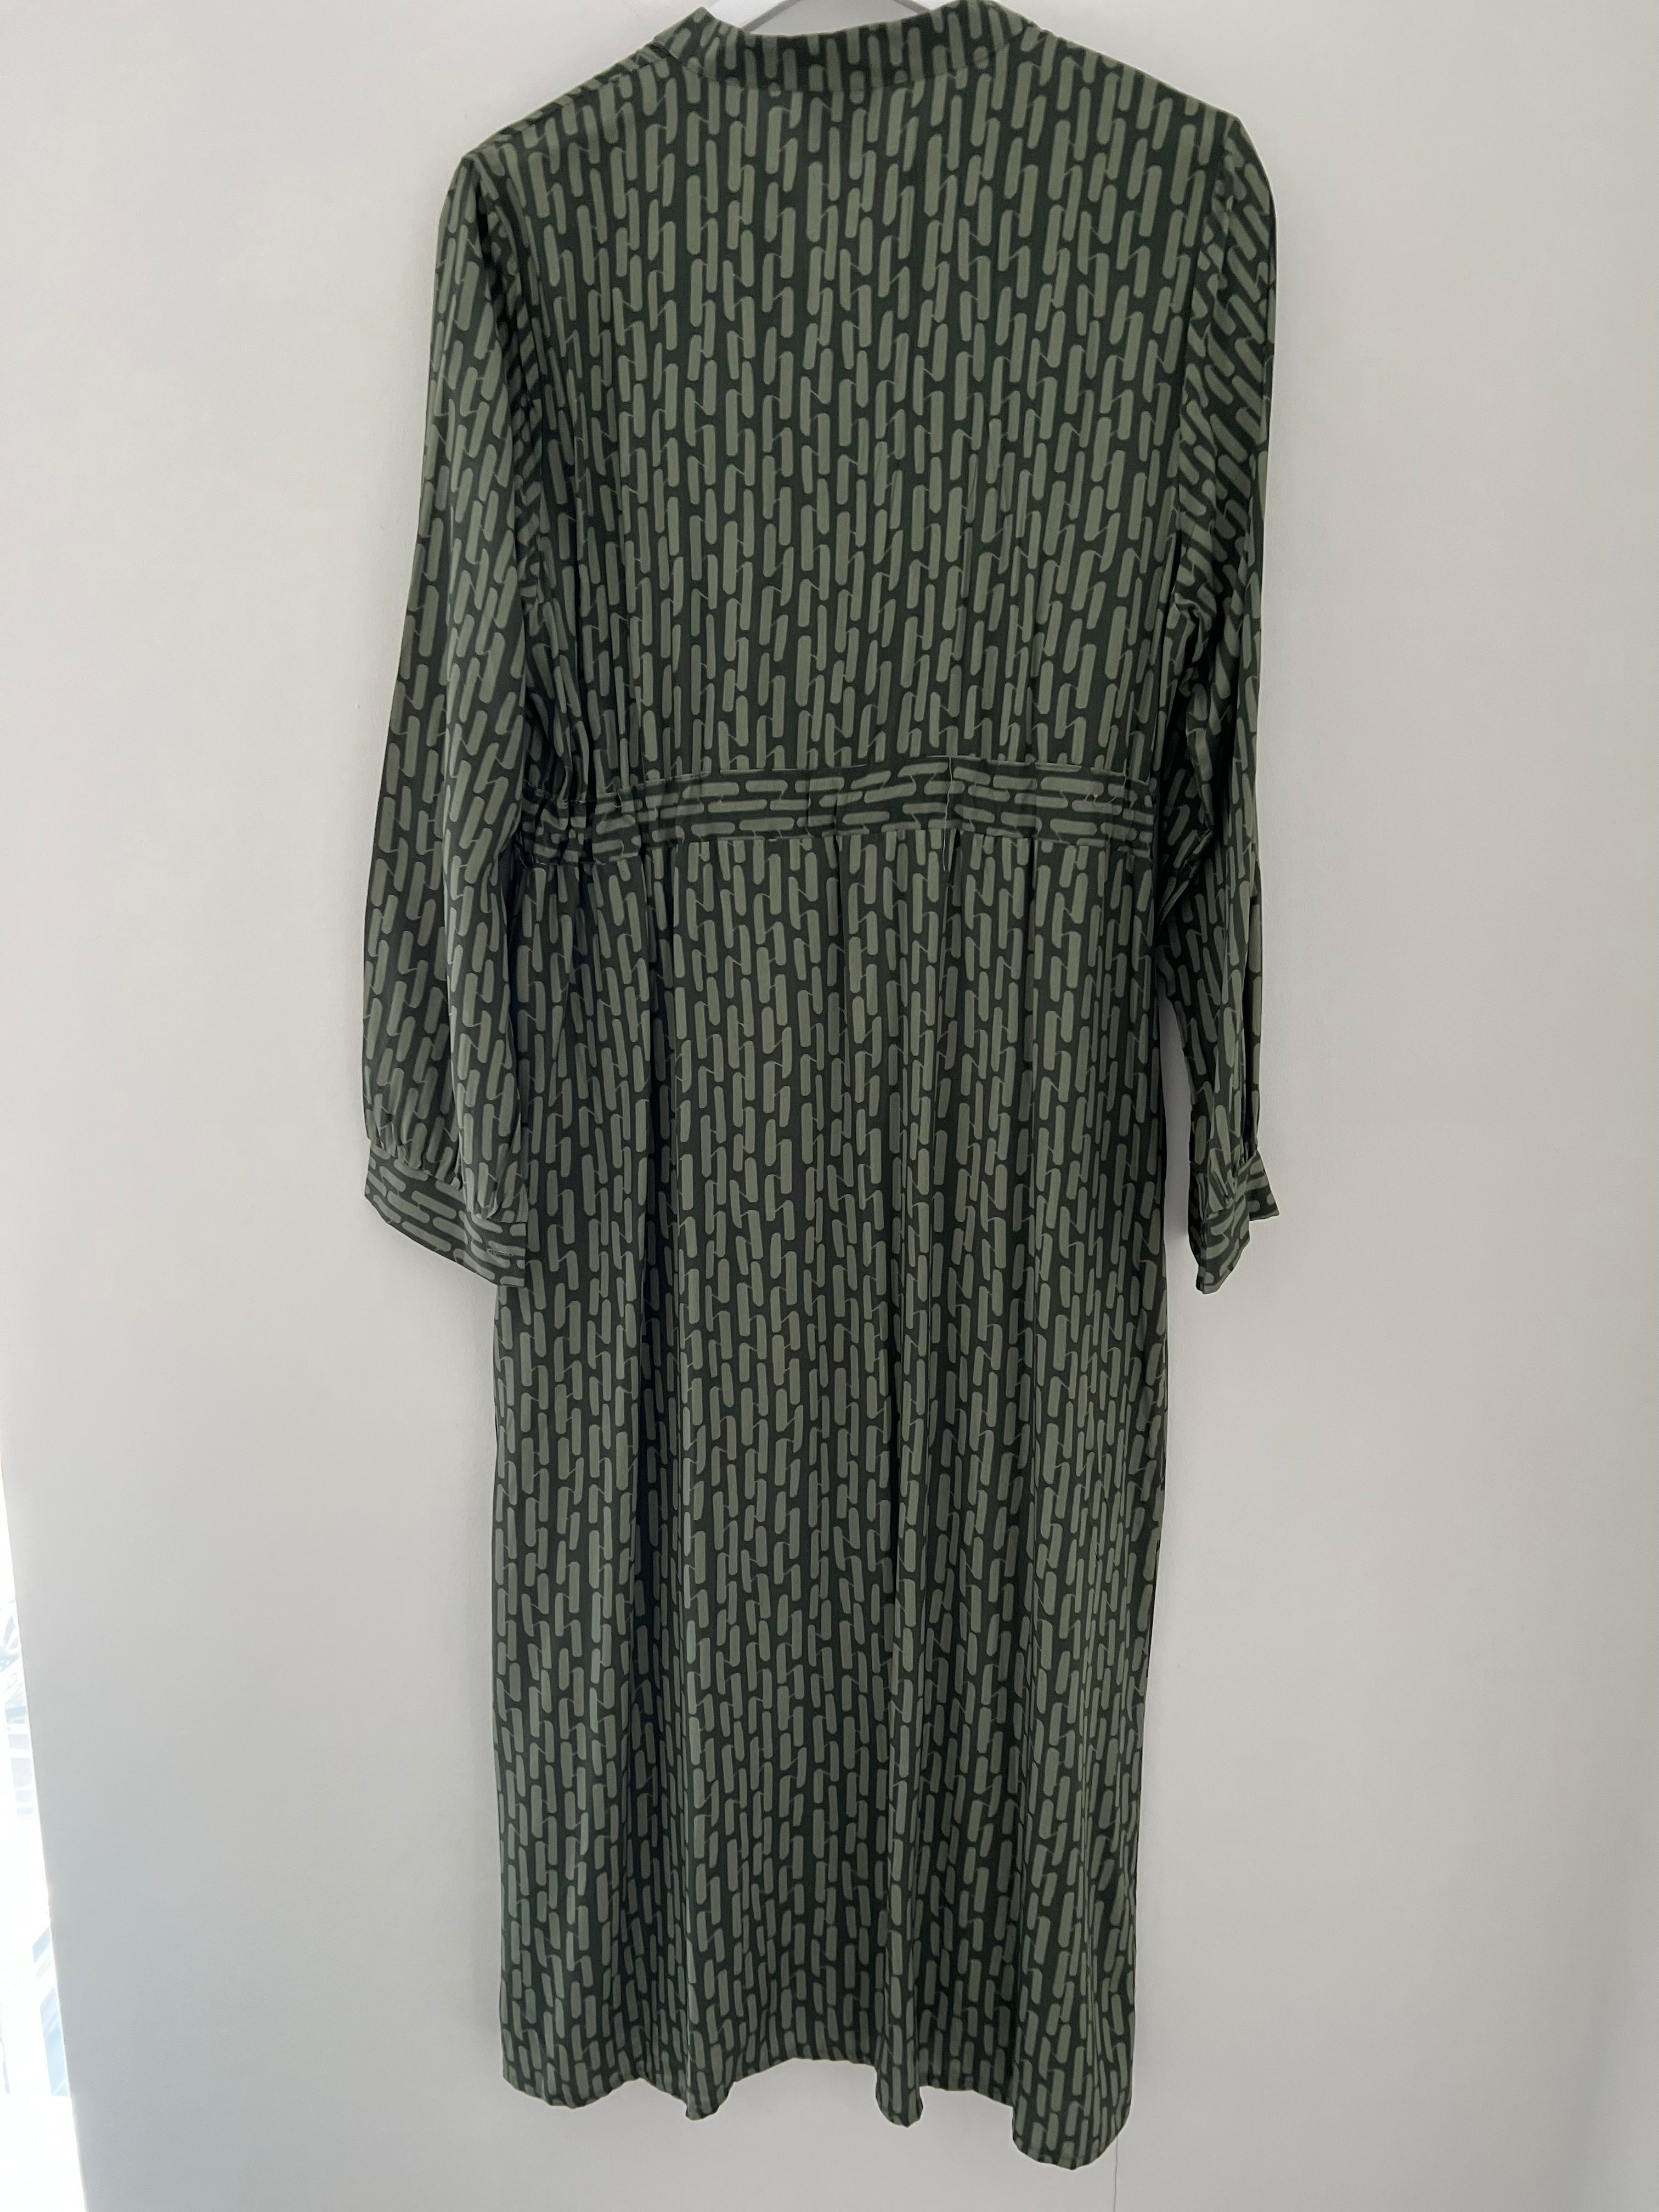 Print Shirtwaister Pocket Dress in Khaki